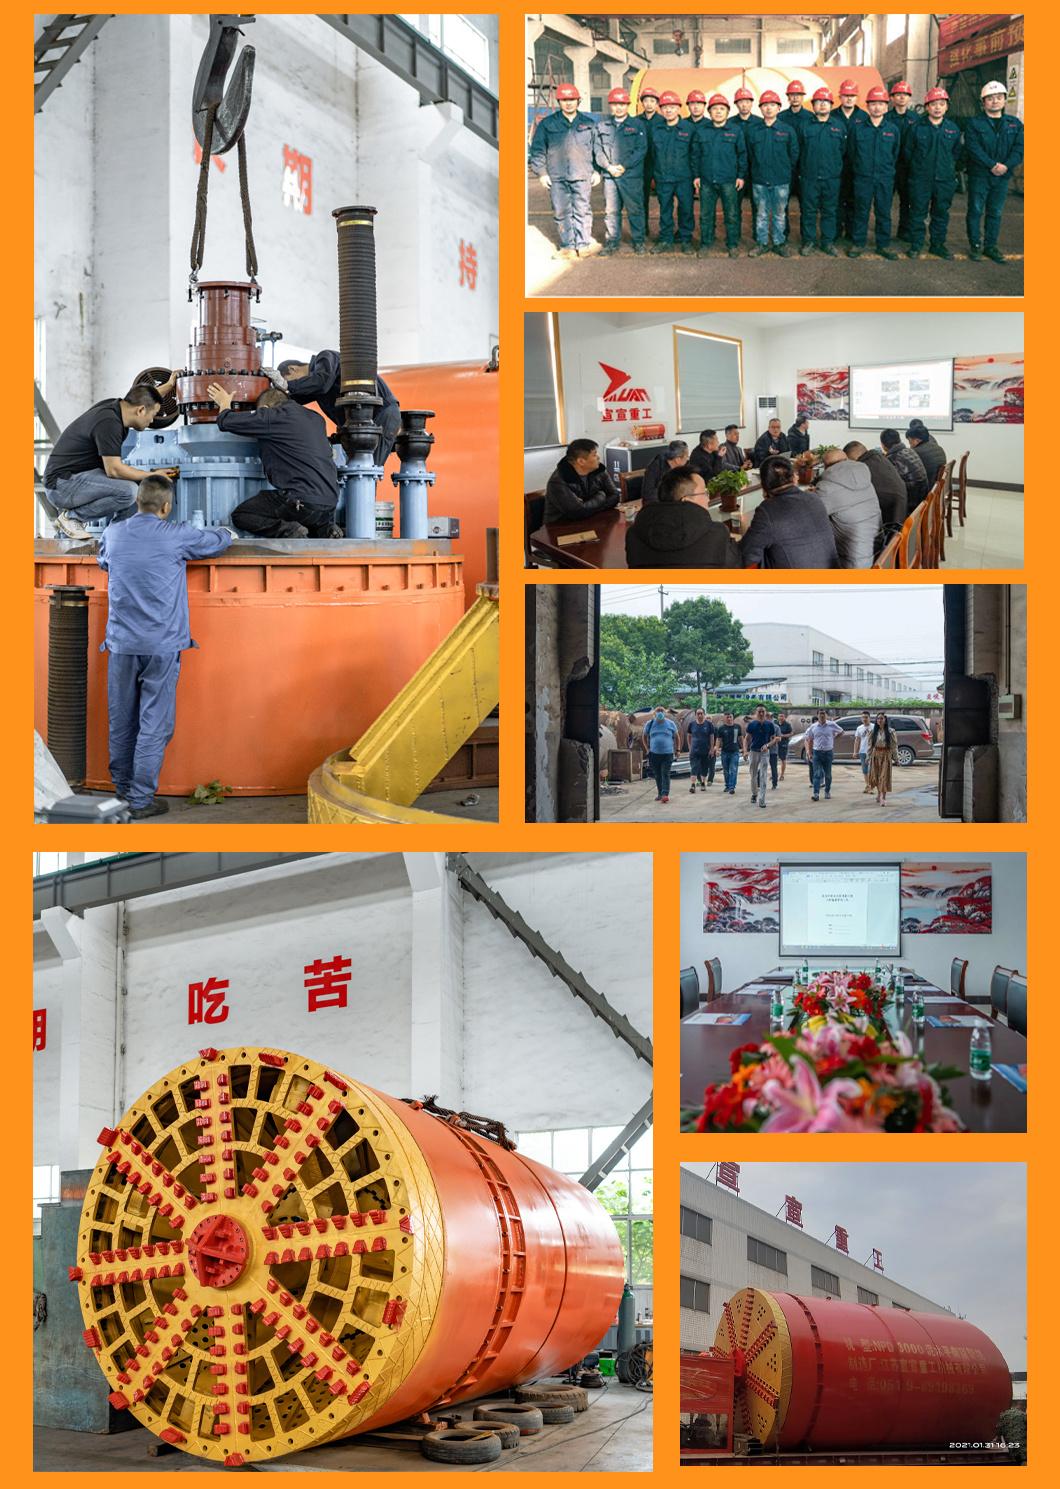 Trenchless/Underground China Sewerage Rock Pipe Jacking Machine Manufacture